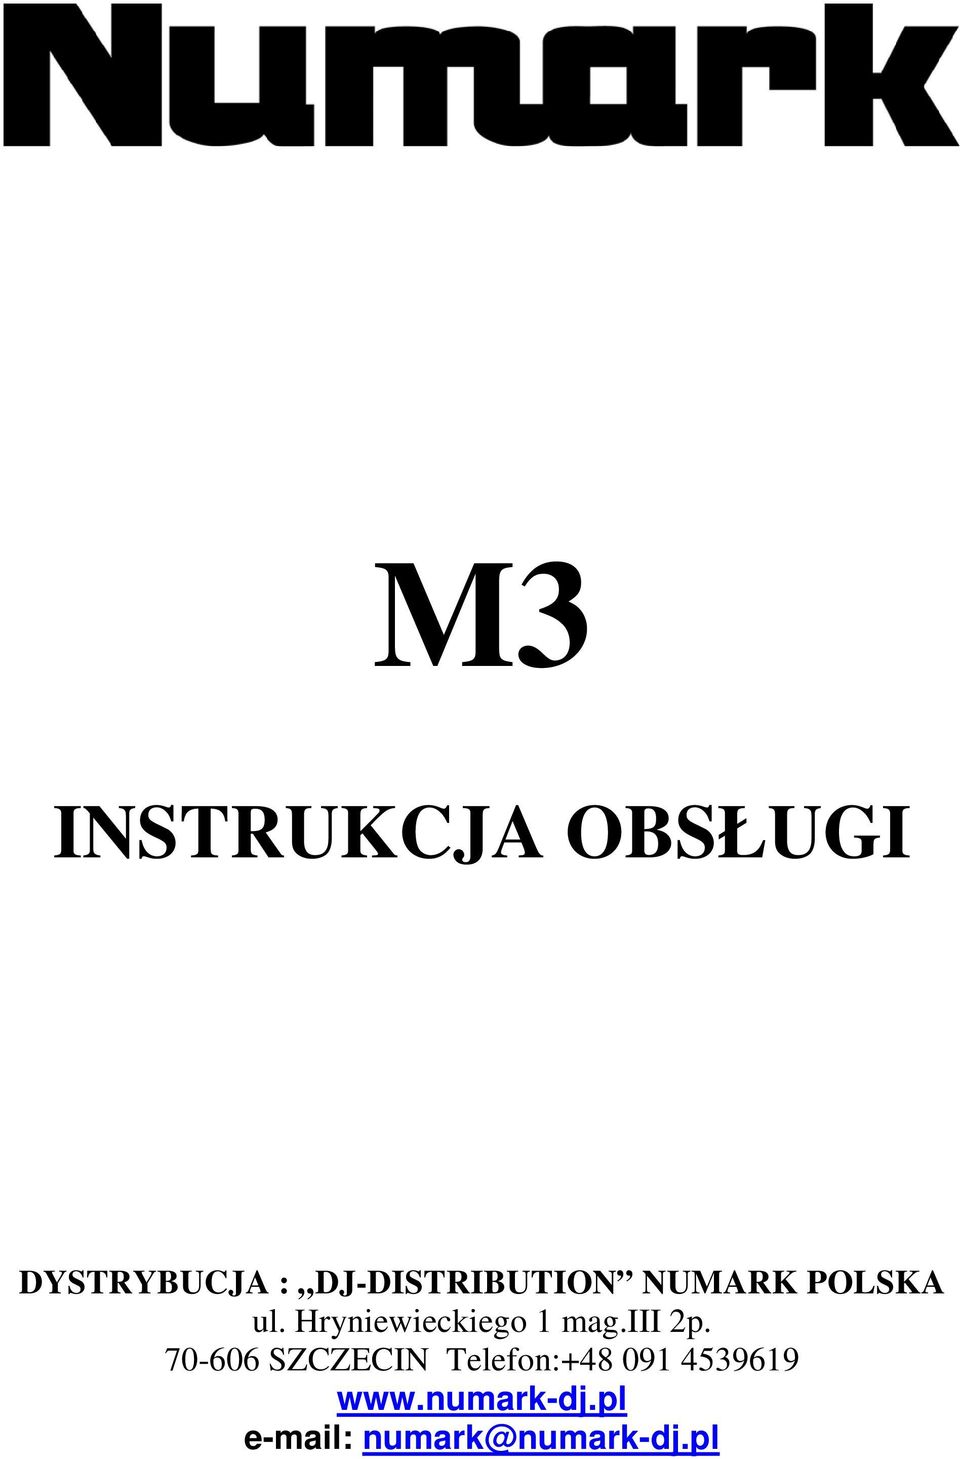 Hryniewieckiego 1 mag.iii 2p.